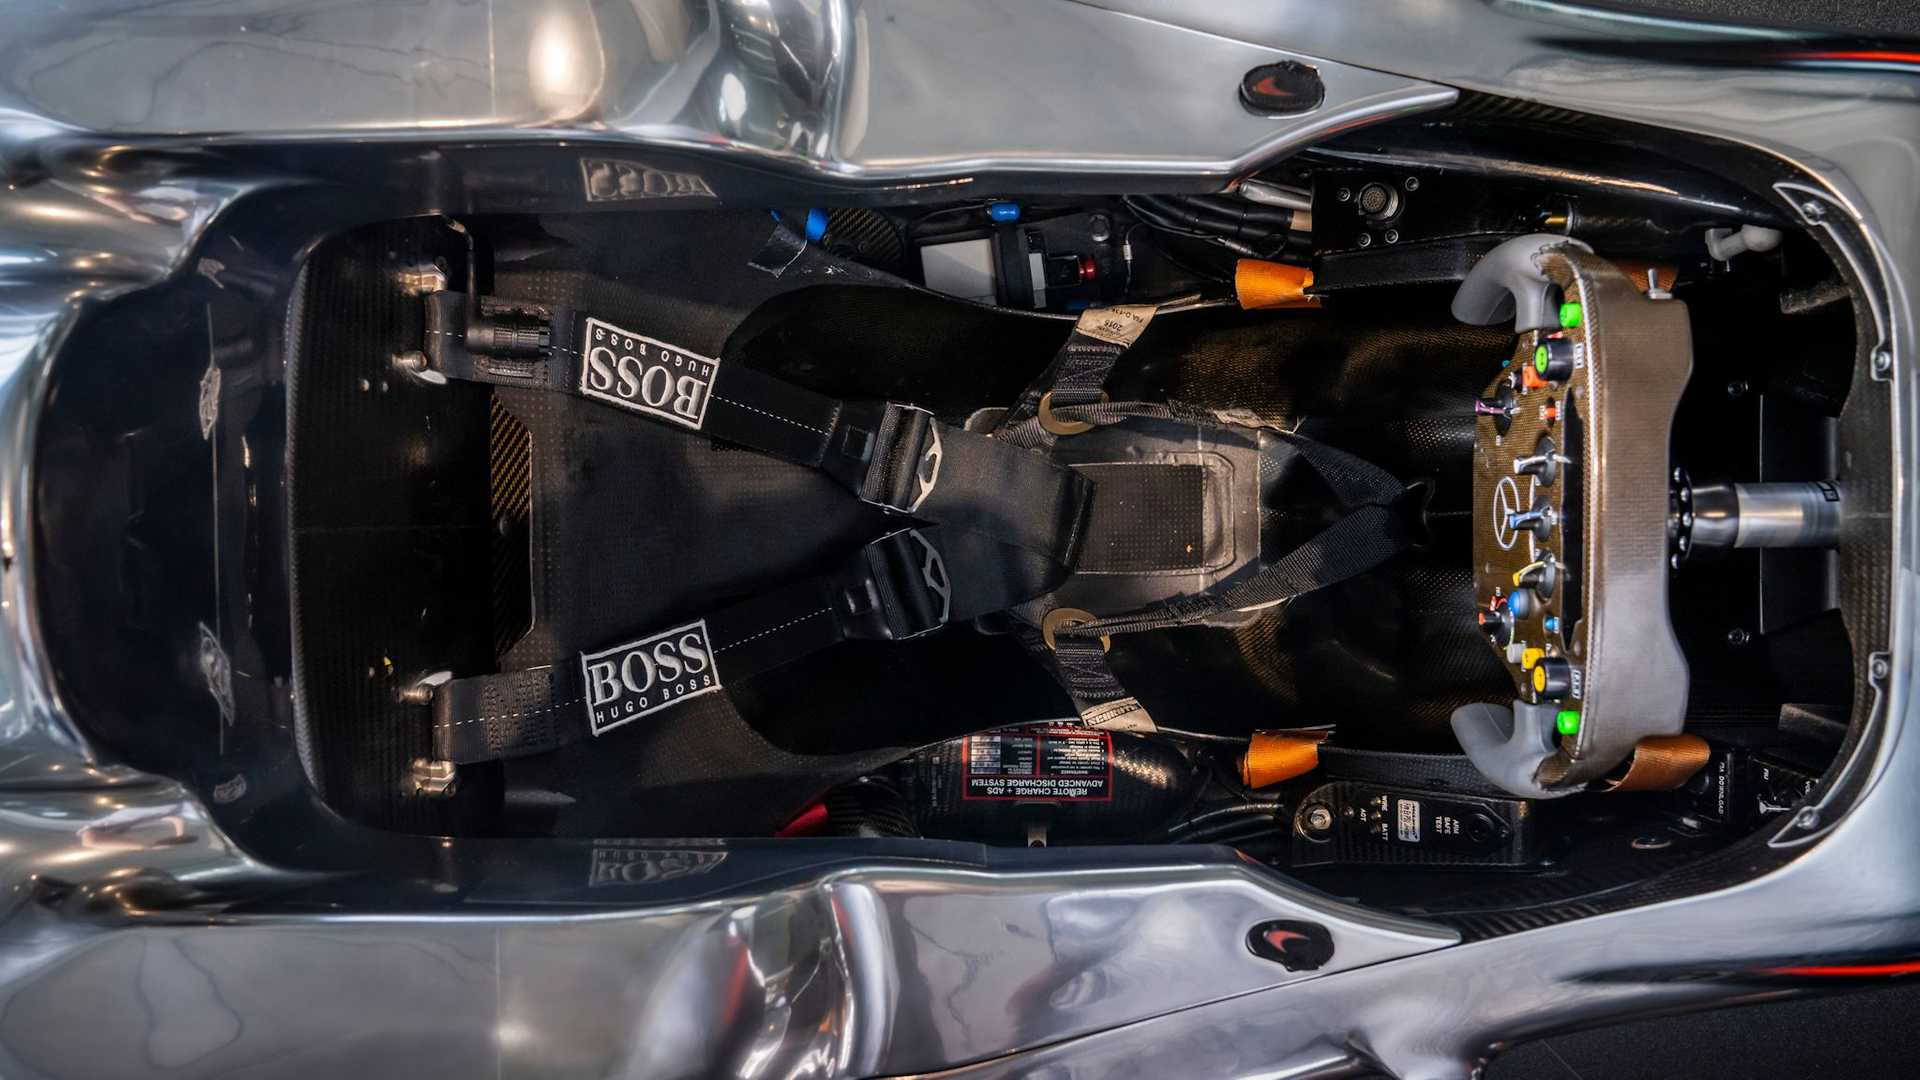 2010 McLaren MP4-25 Formula One car driven by Lewis Hamilton - Photo credit: RM Sotheby's